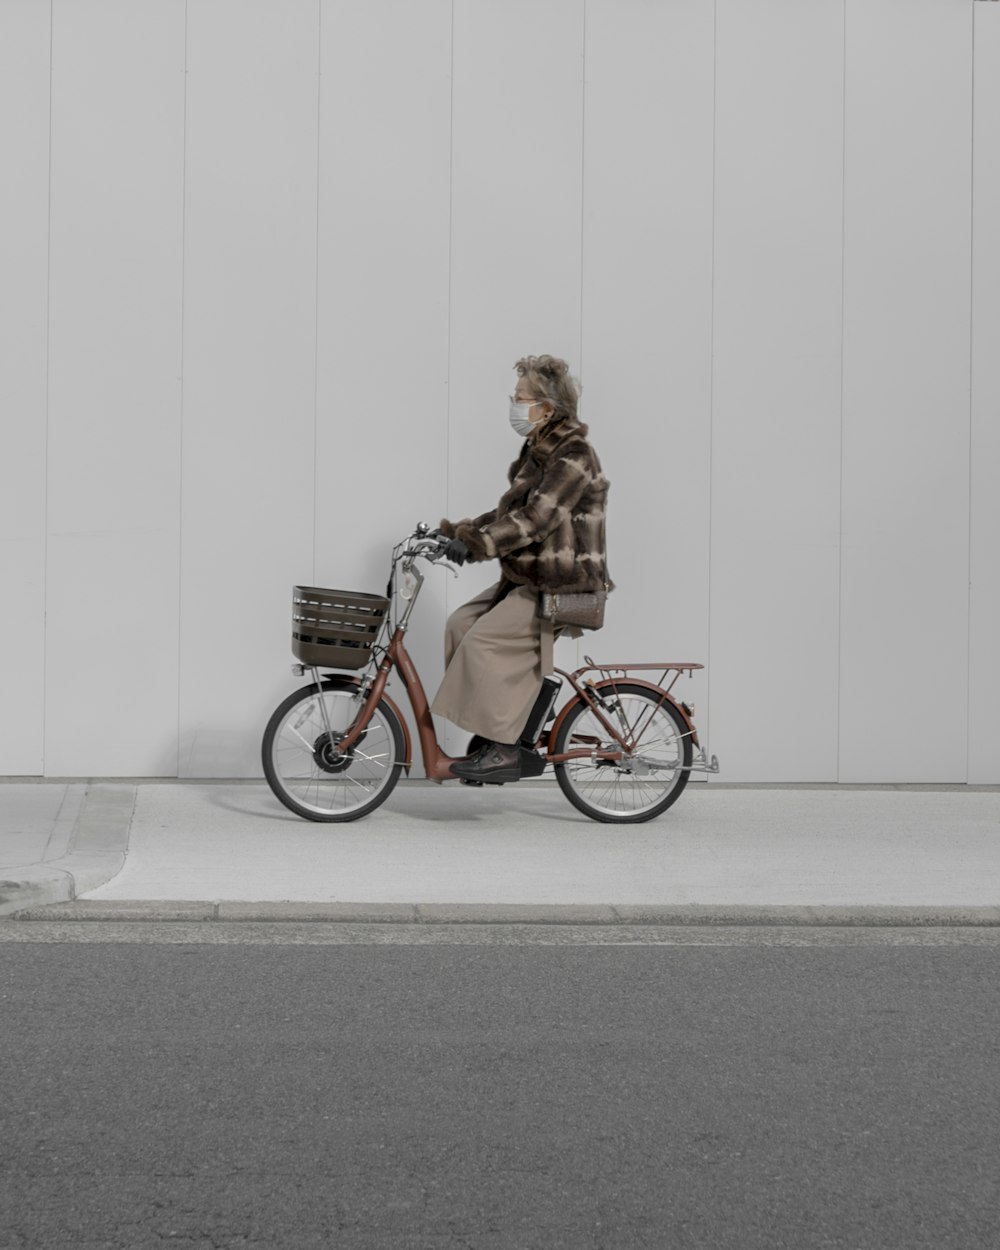 woman riding city bike near wall and road